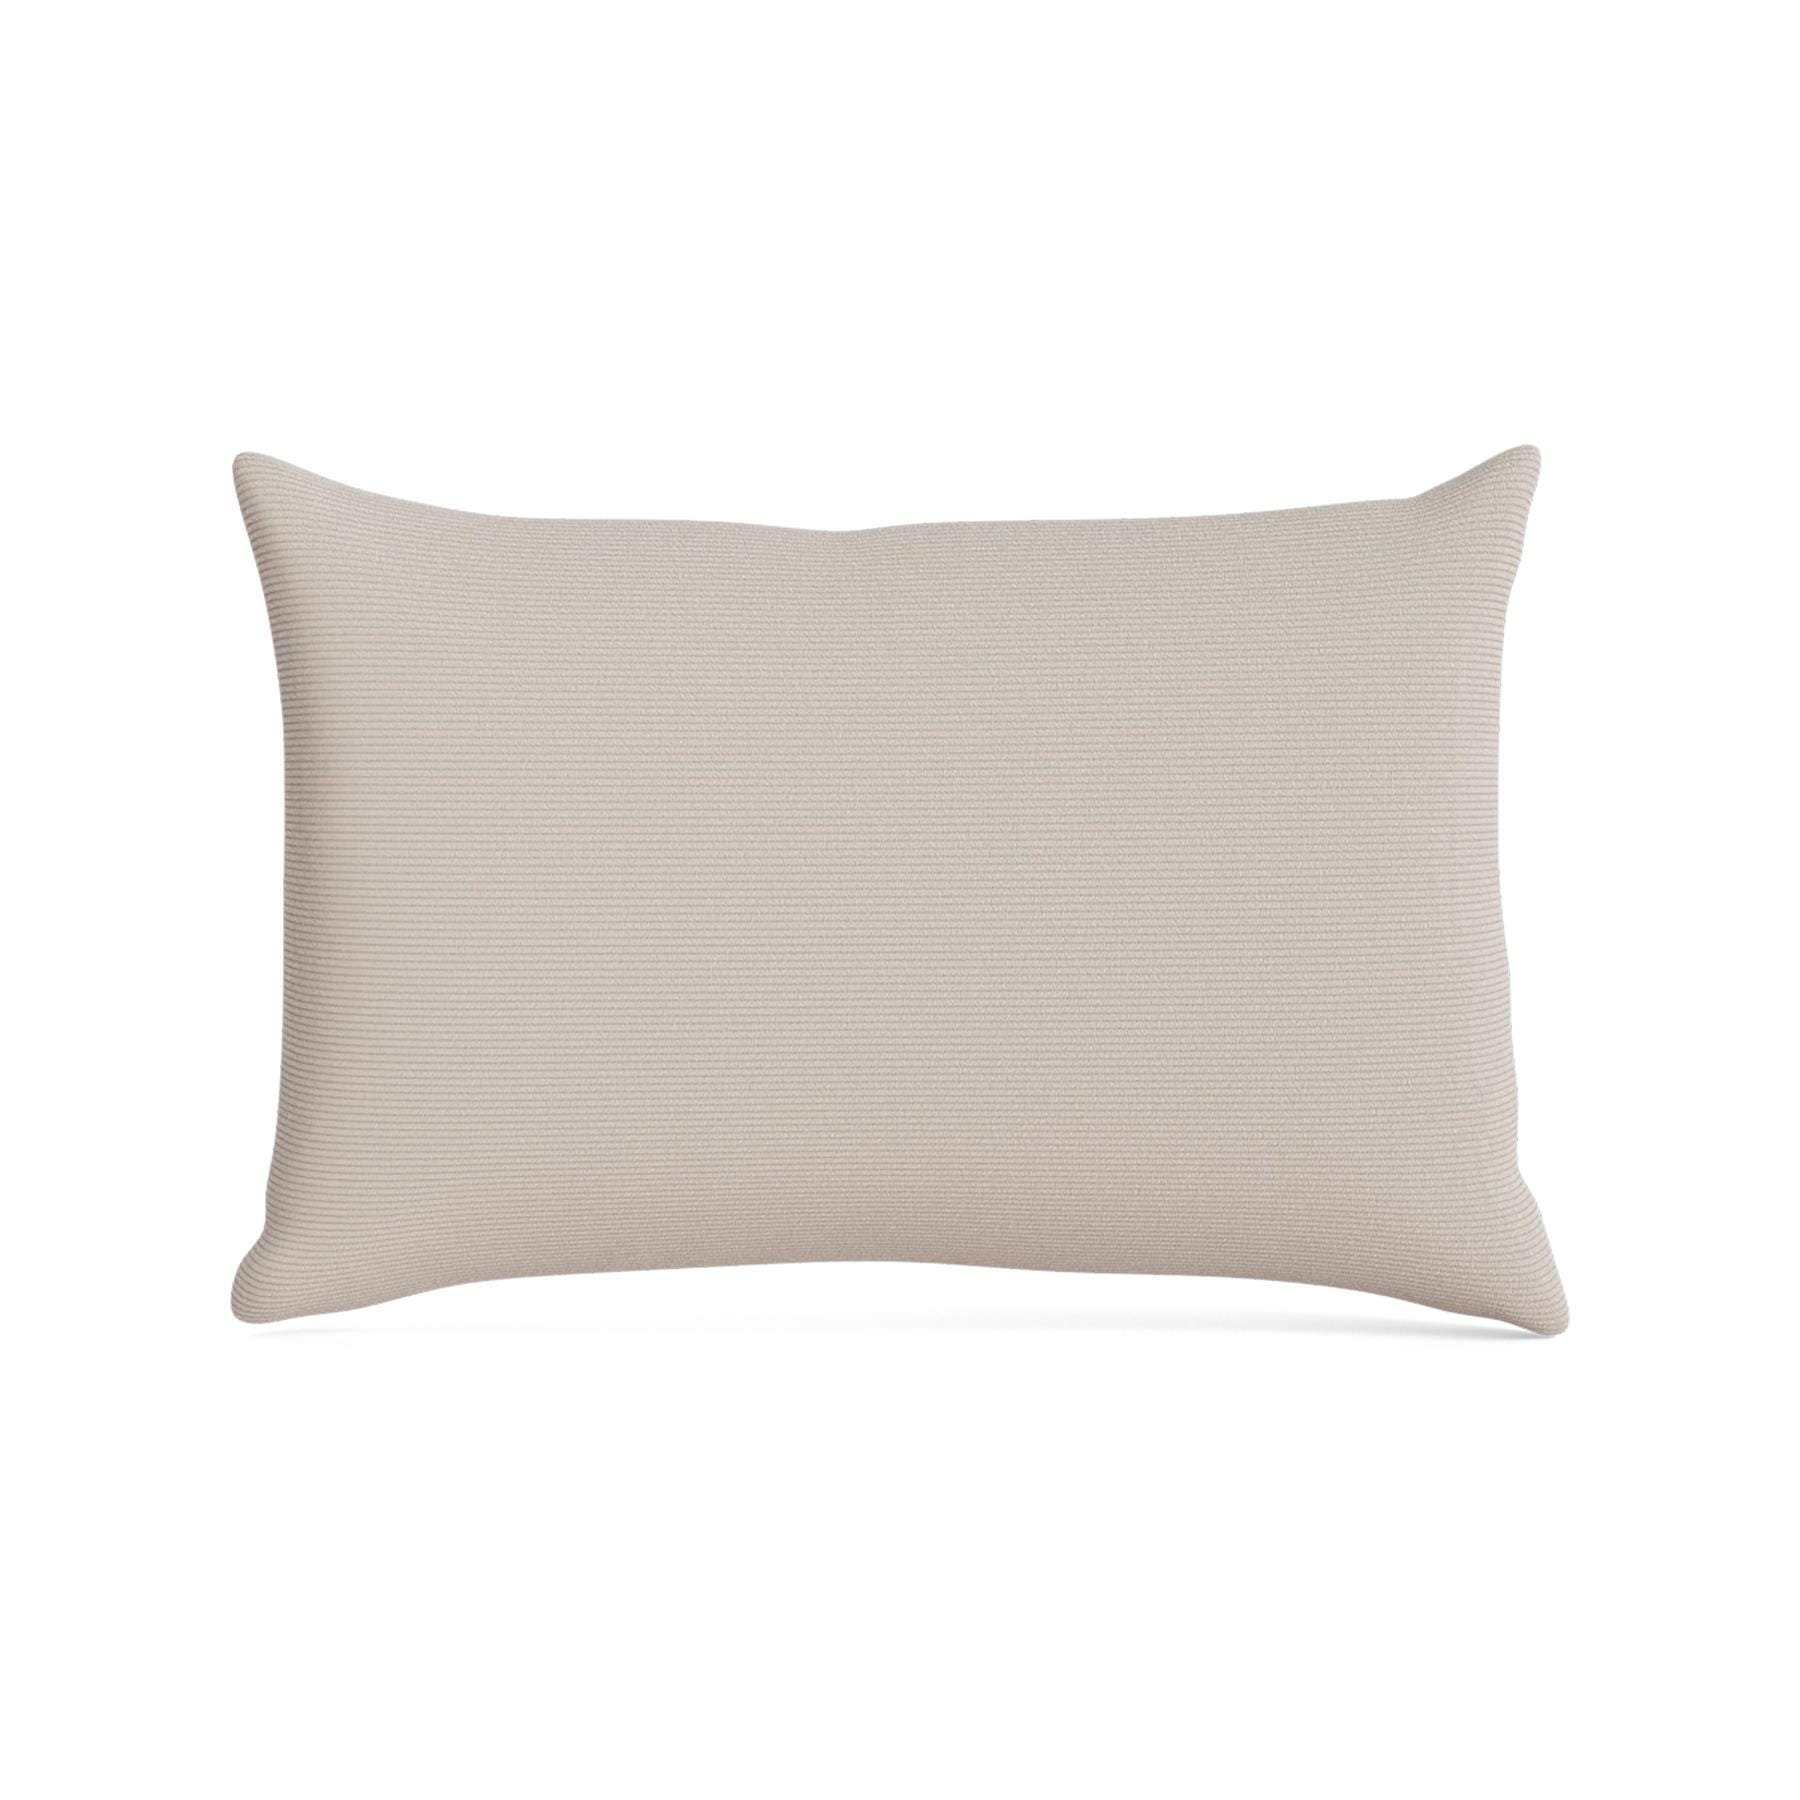 Make Nordic Pillow 40cmx60cm Crush Boucle Beige 50 Down And Fibers Cream